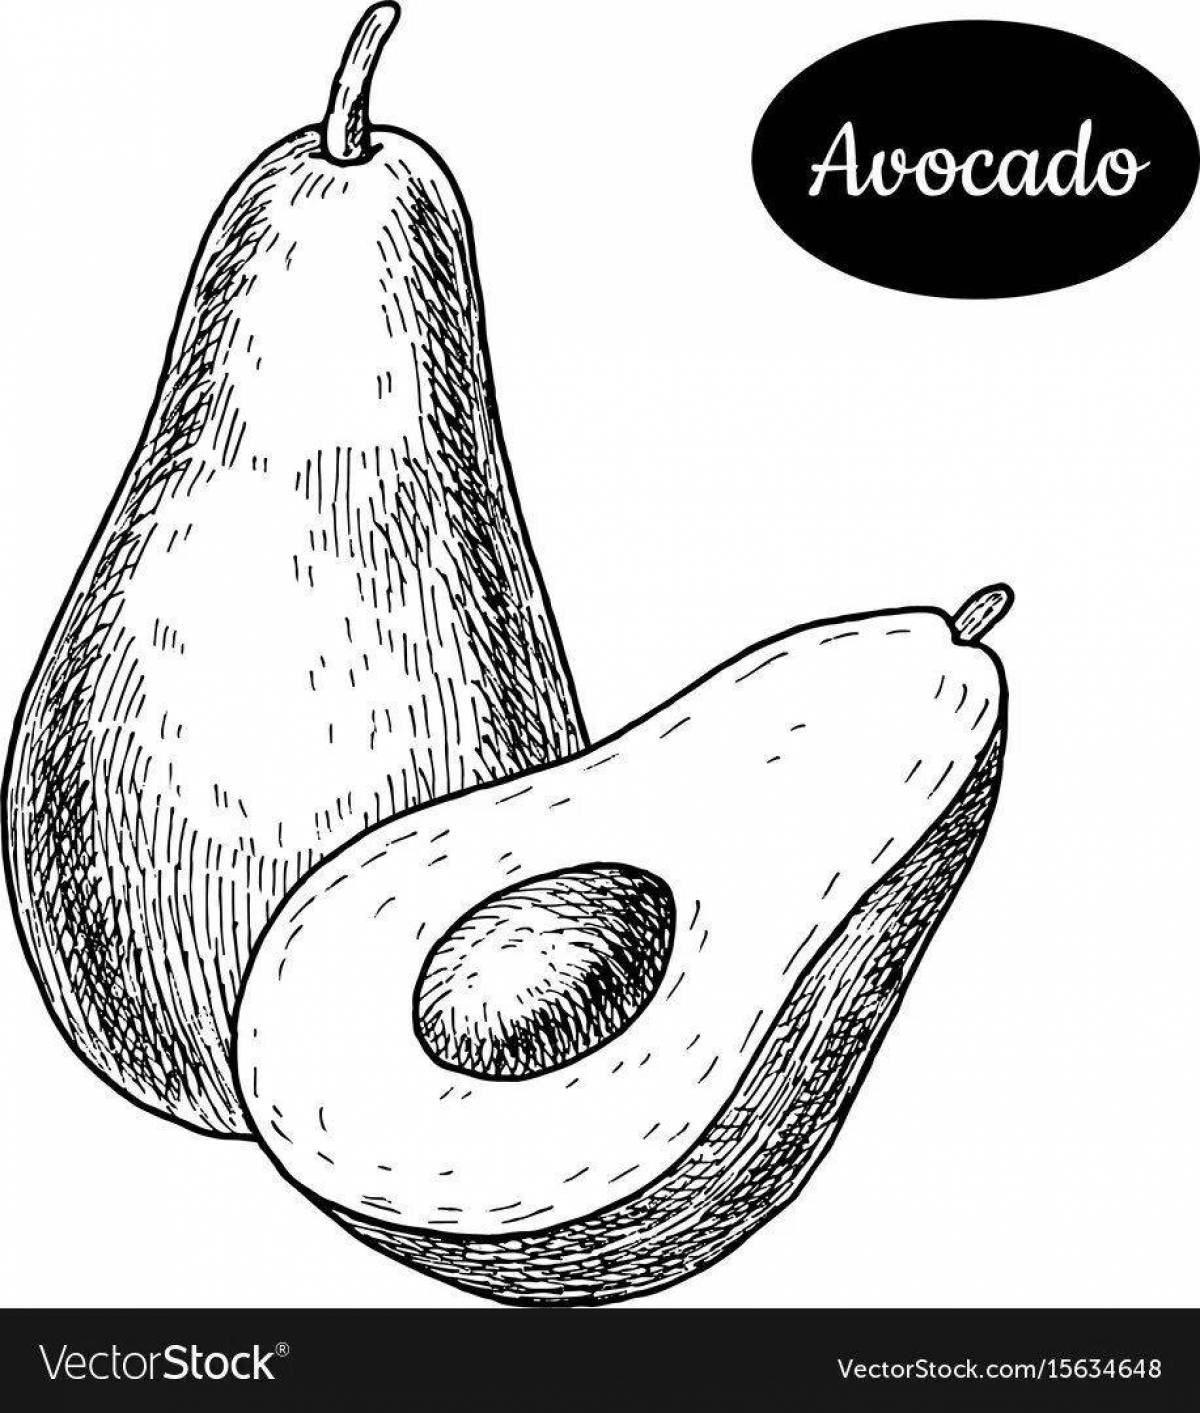 Playful avocado drawing